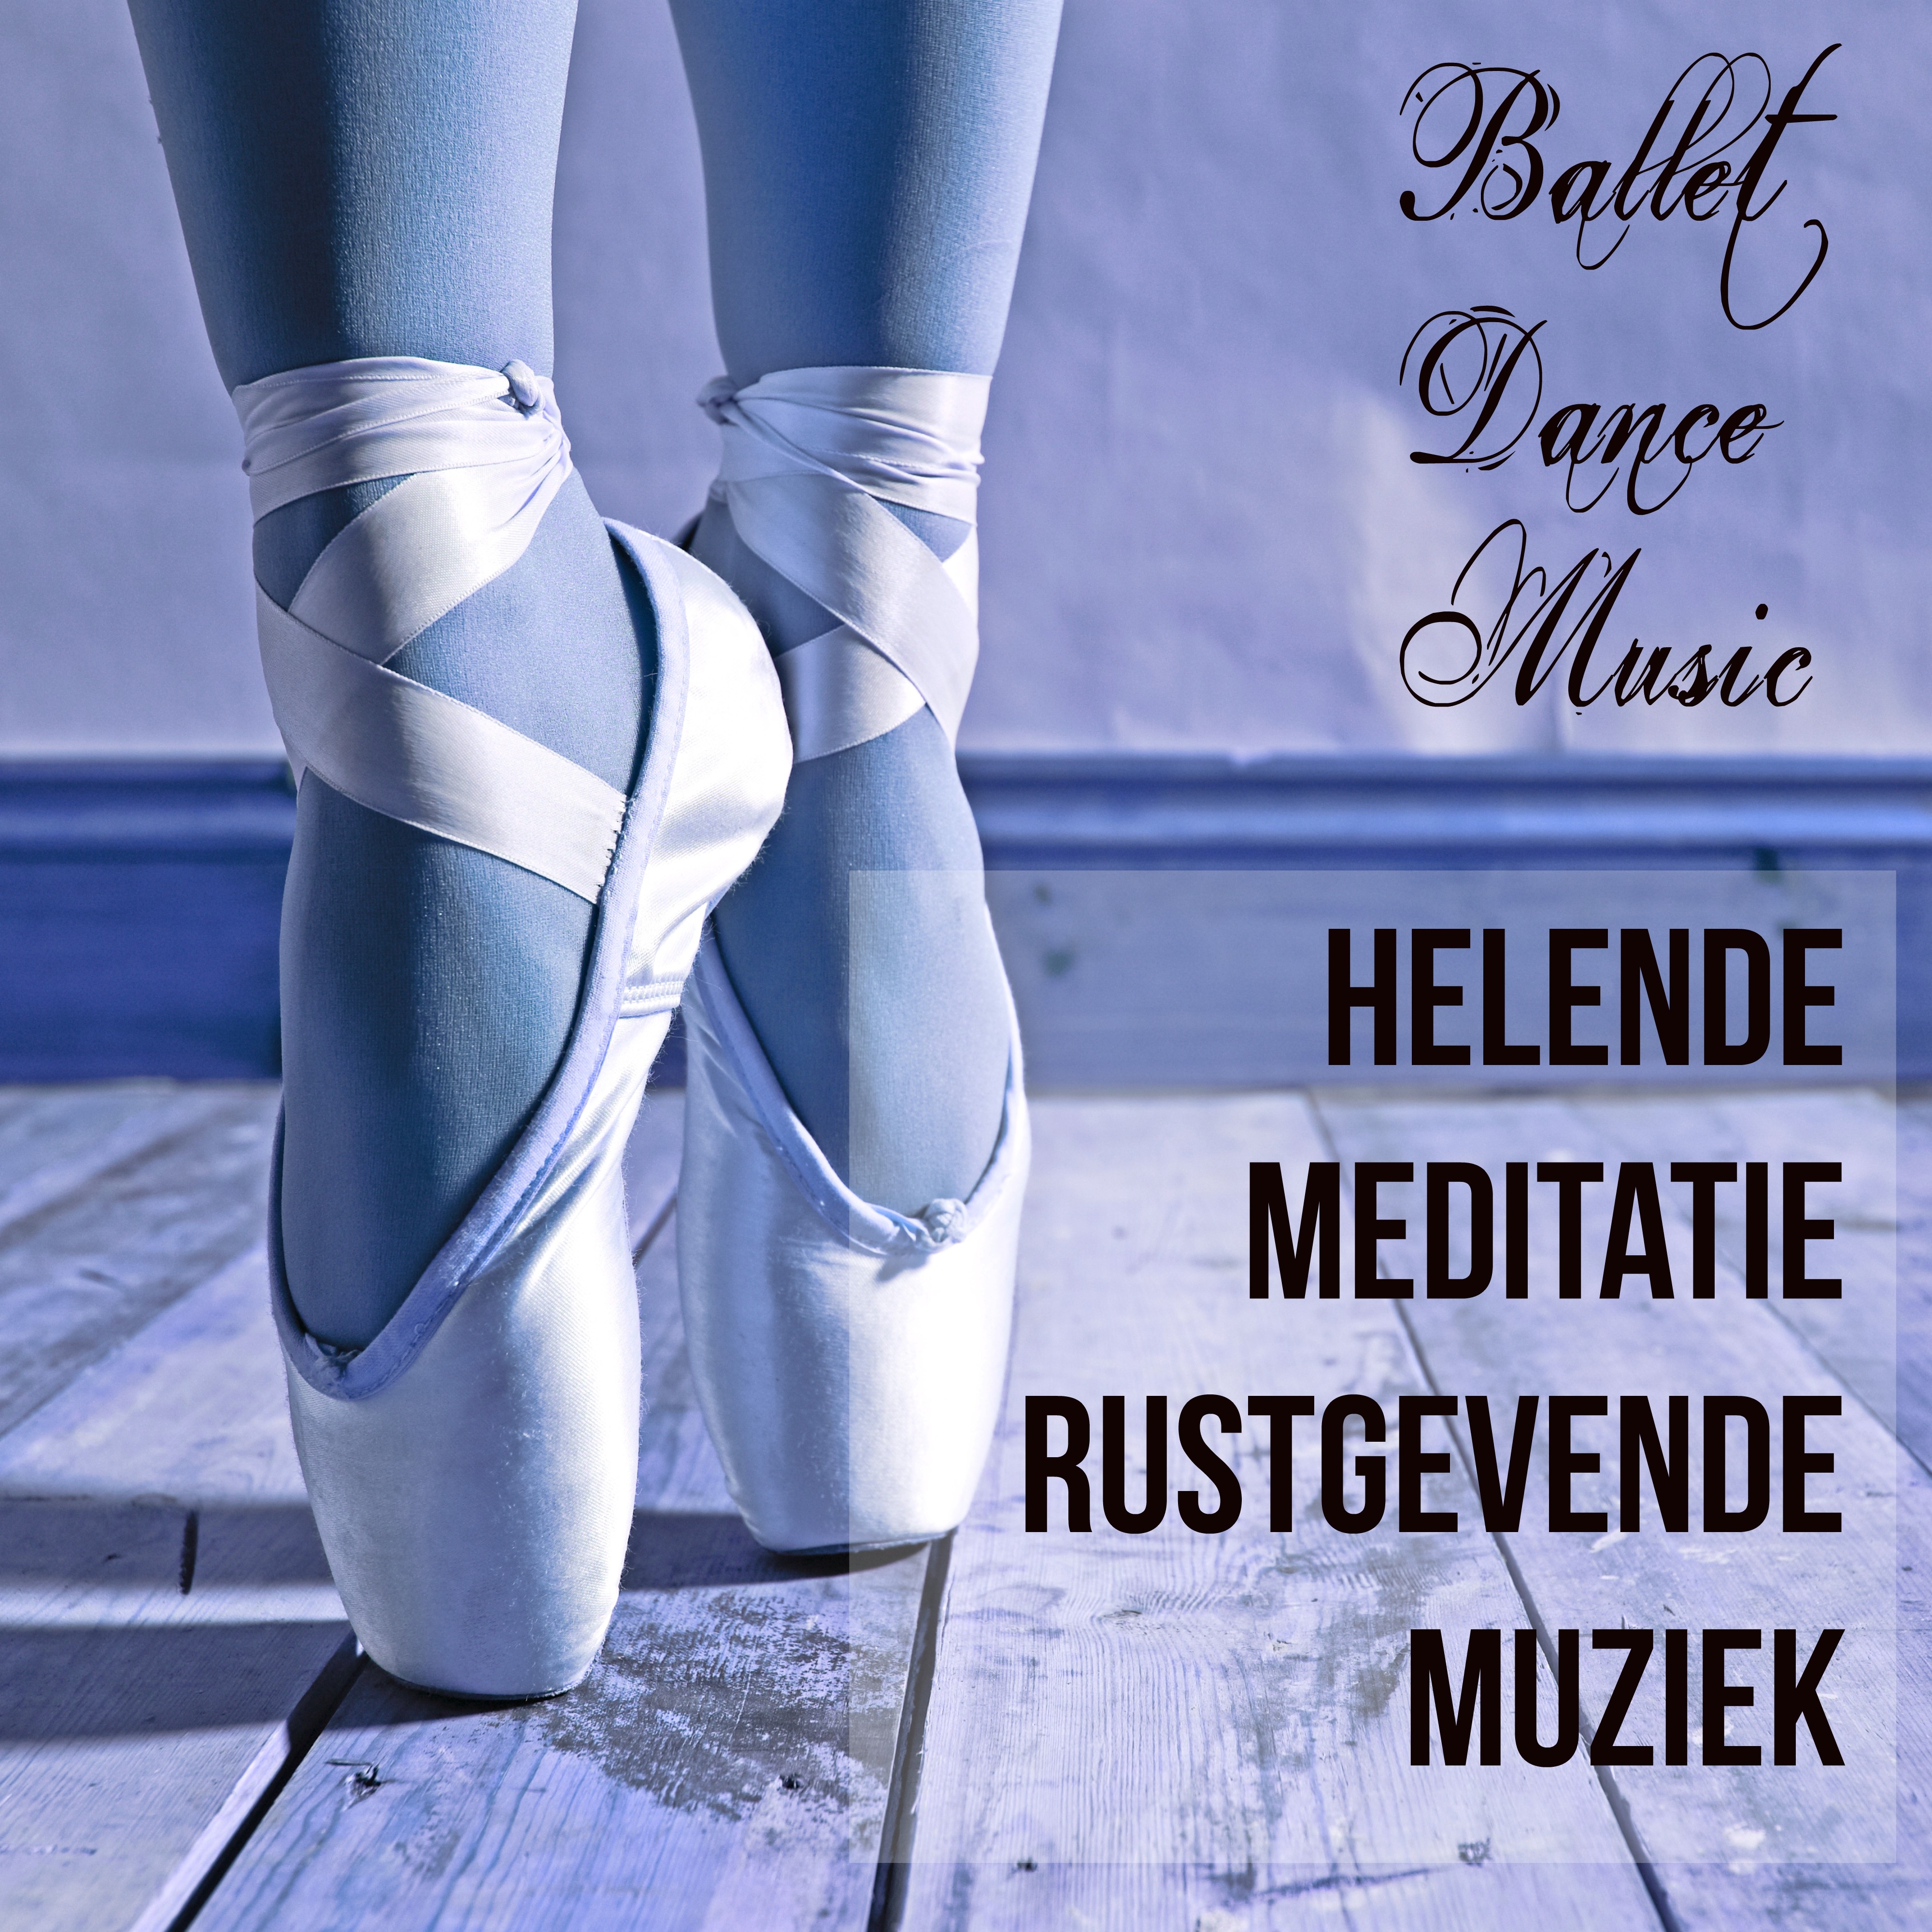 Soft Background Music (Ballet)